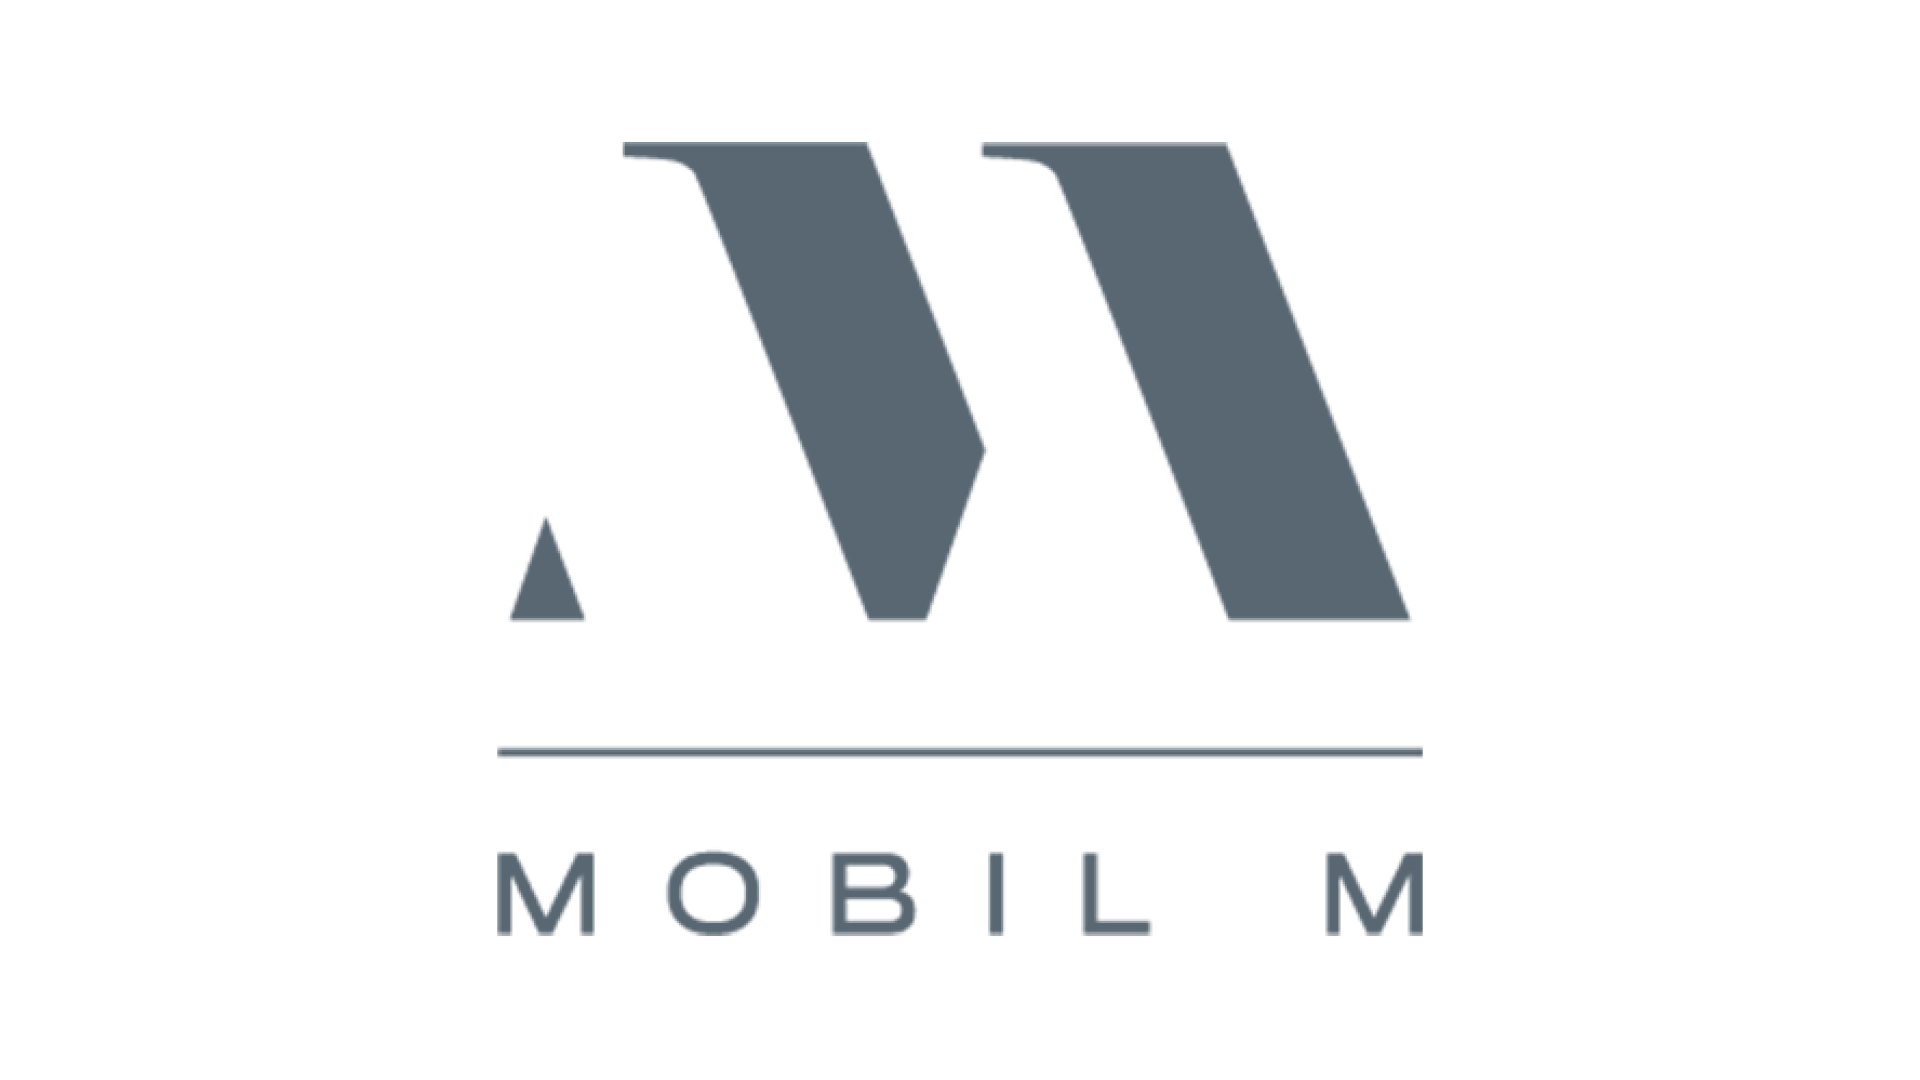 Mobil M